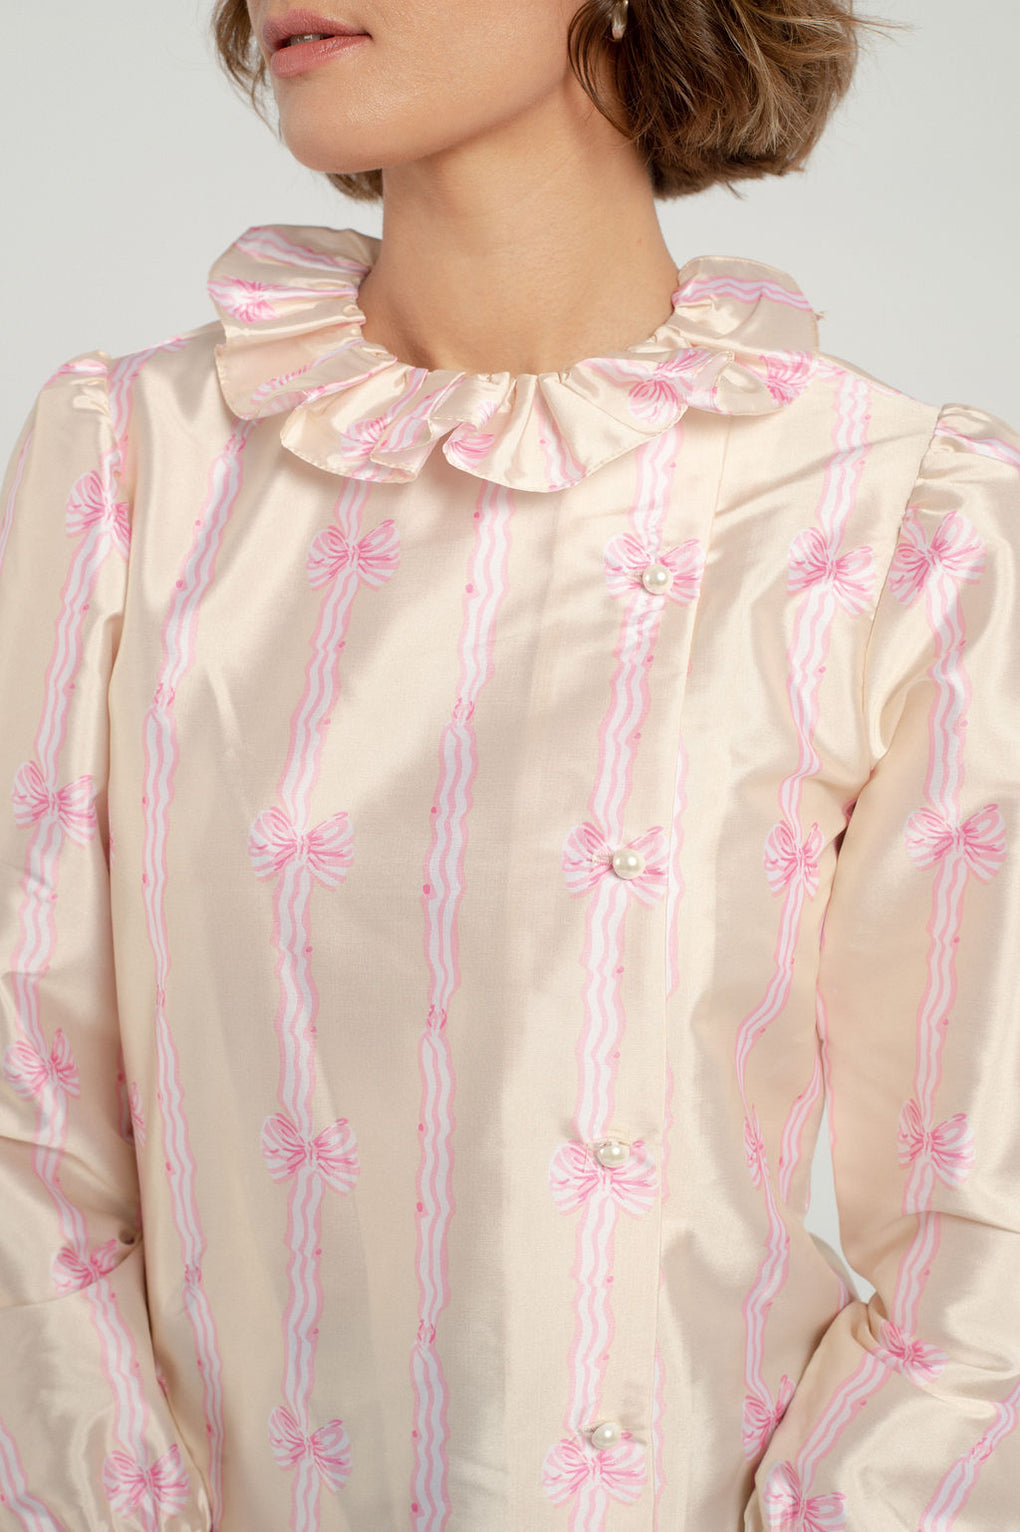 Batsheva-Batsheva petal blouse-batsheva bow blouse-batsheva silk blouse-Idun-St. Paul